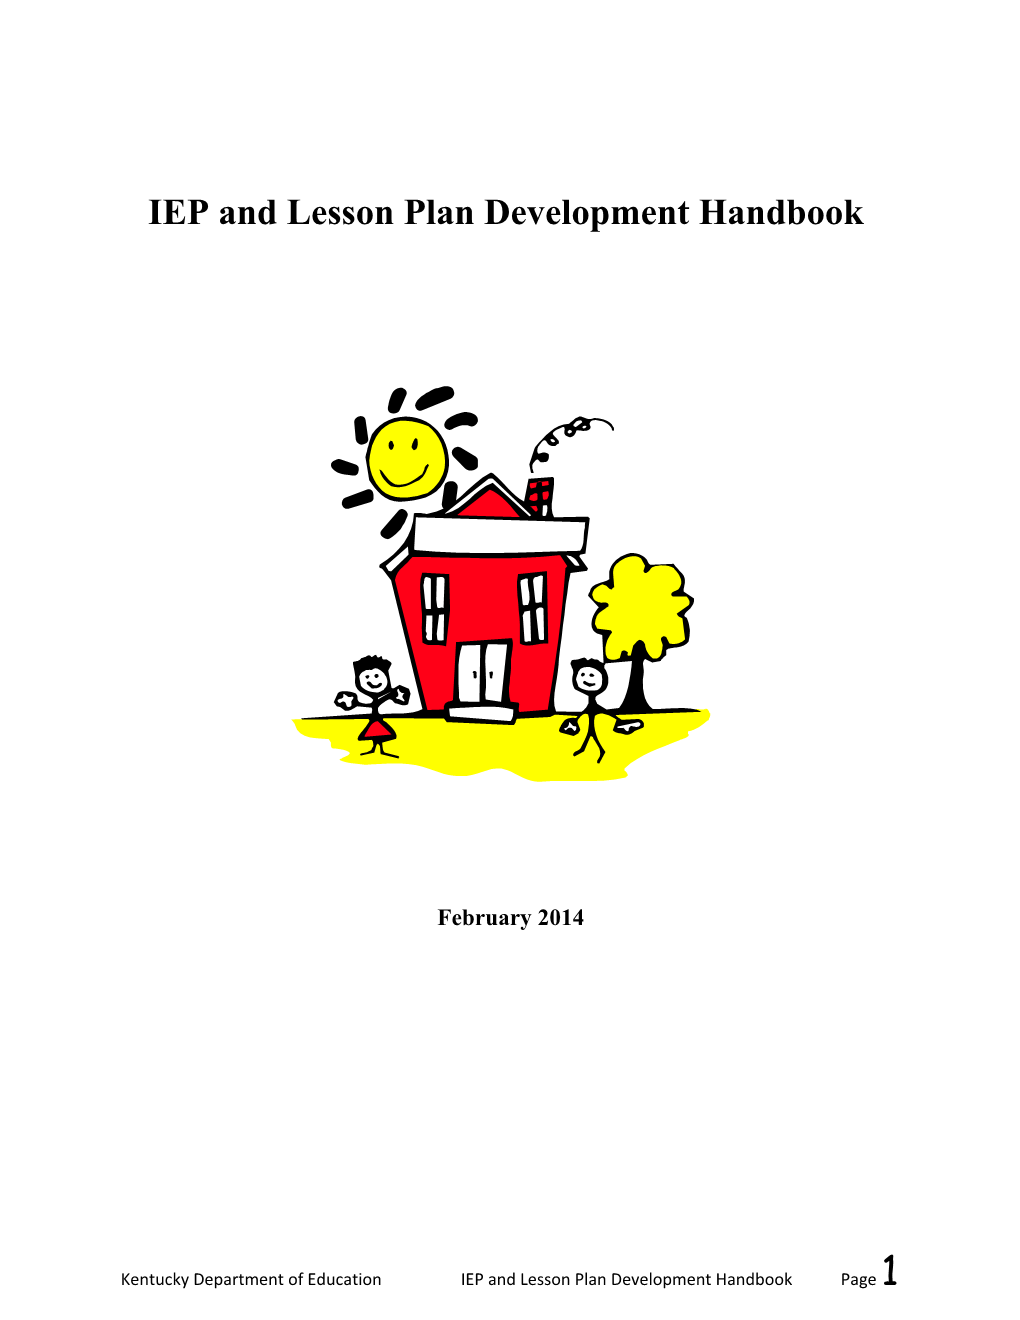 IEP Lesson Plan Handbook